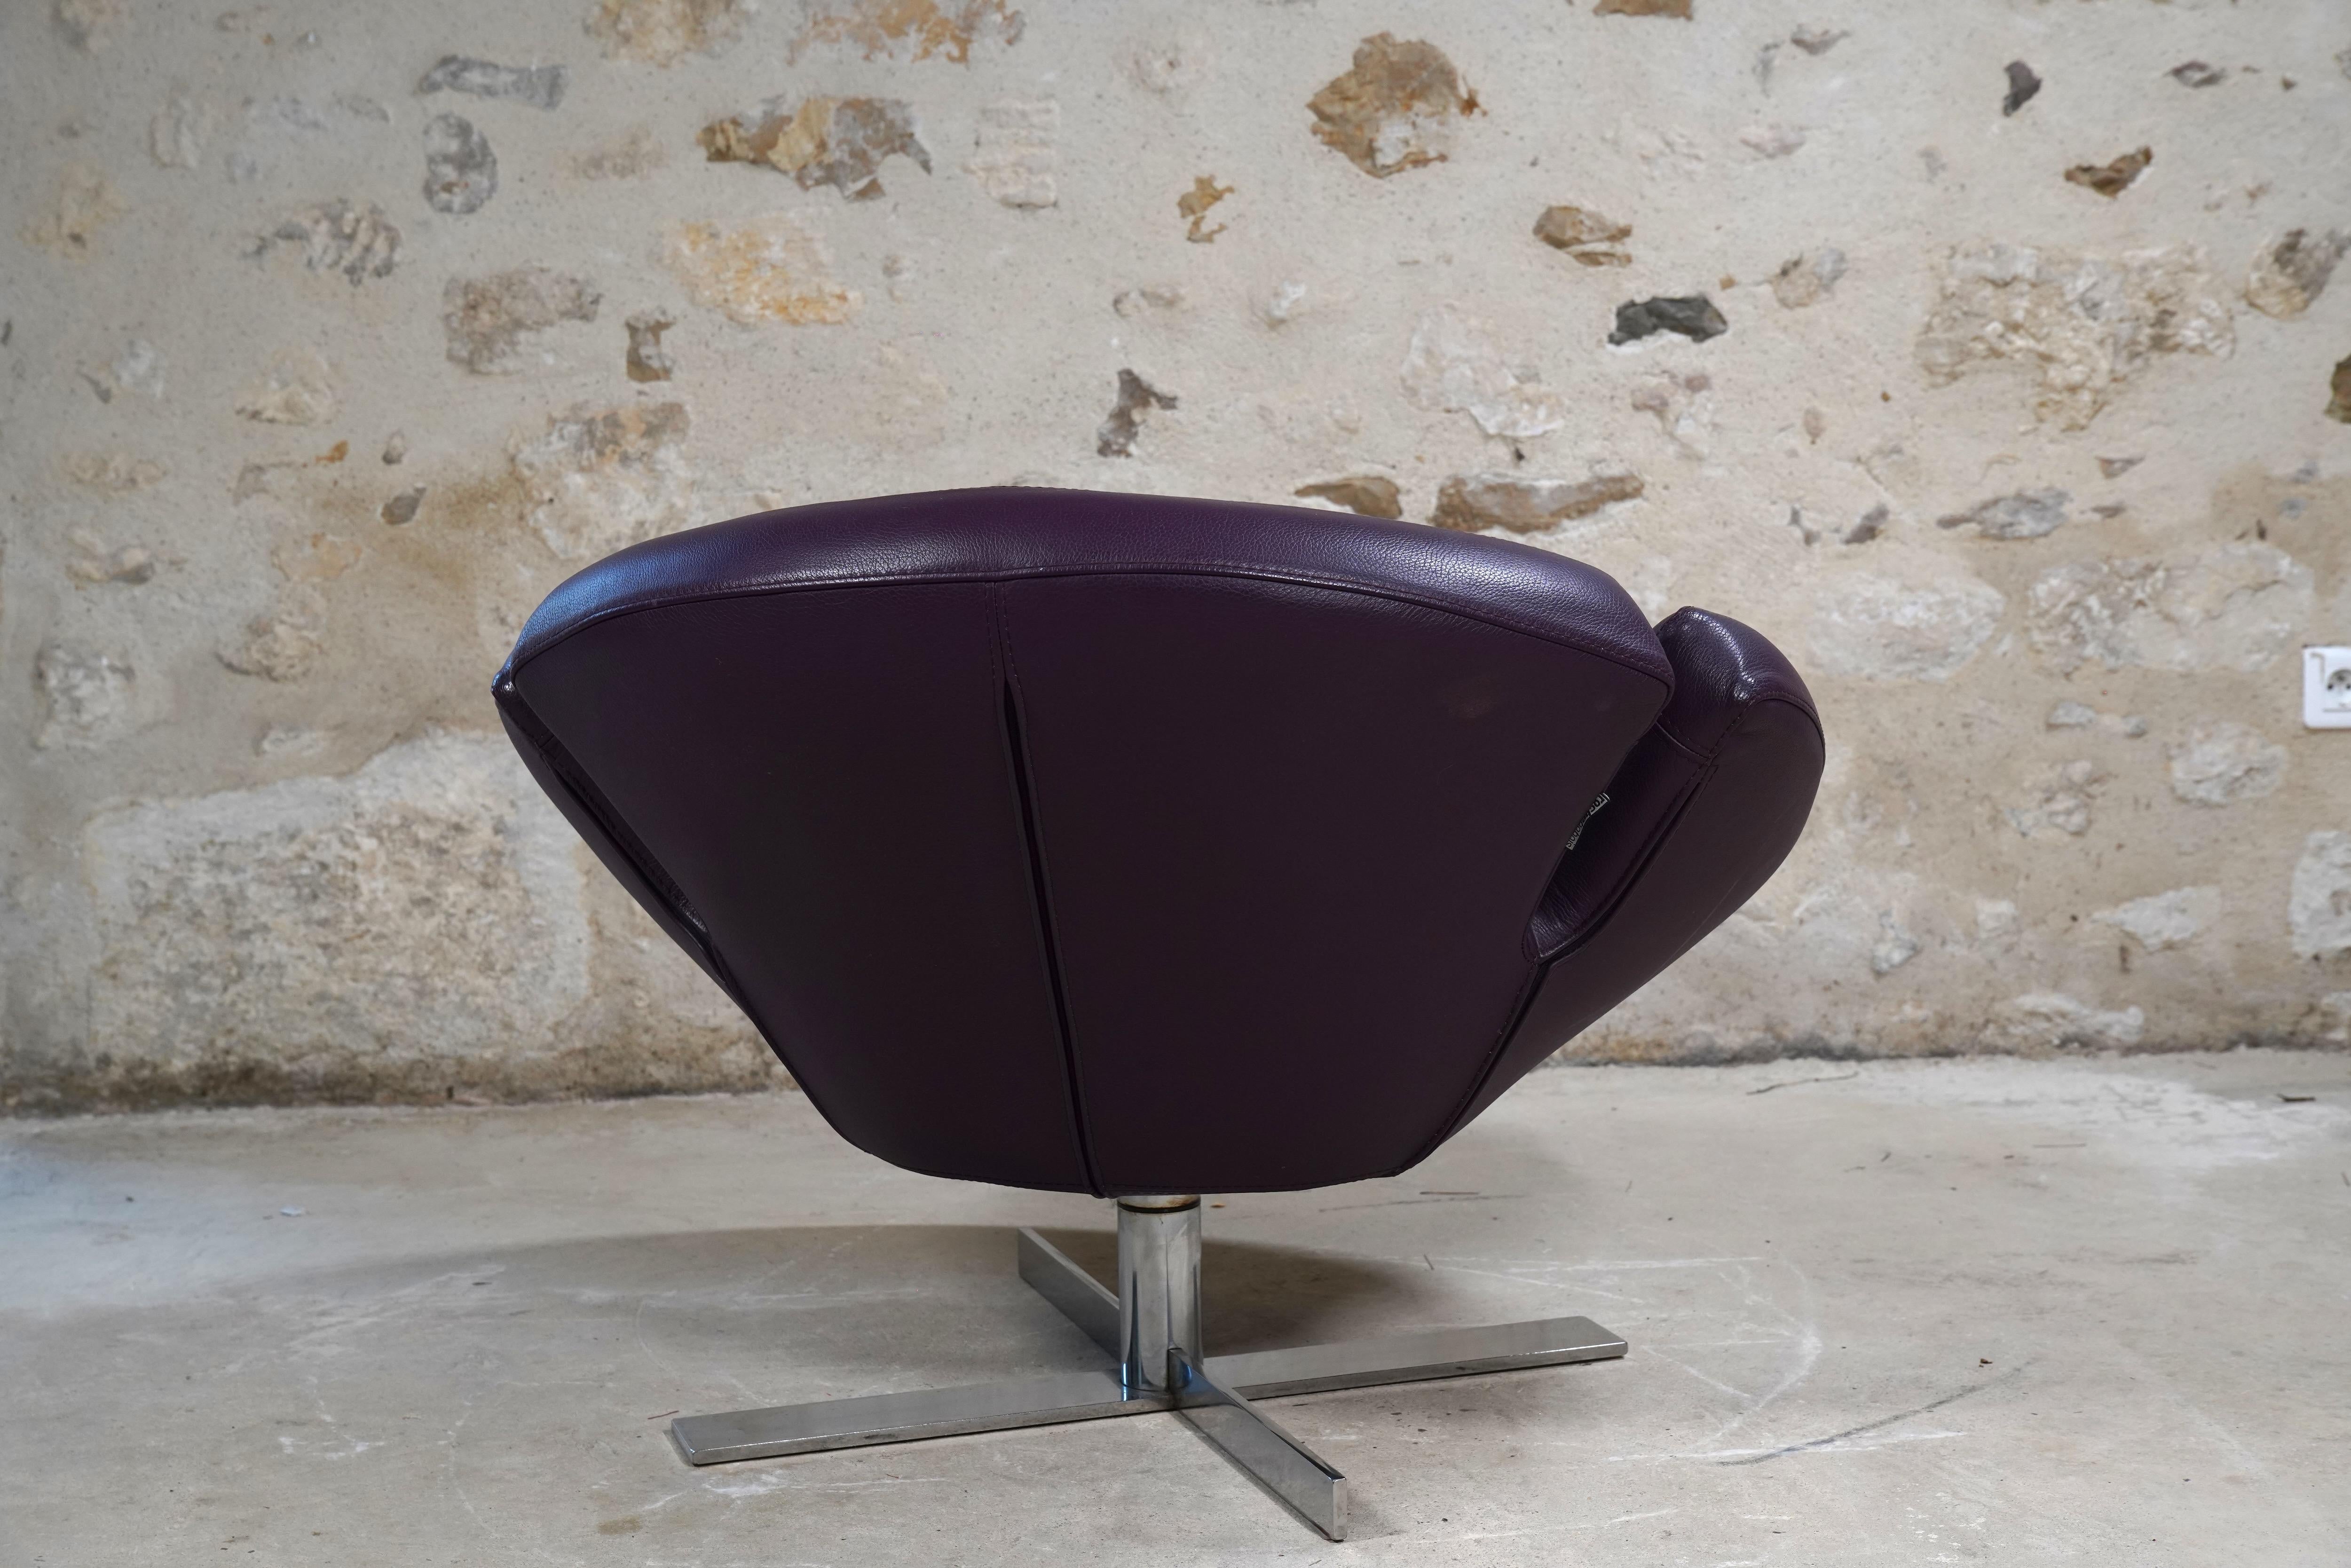 French Roche Bobois 'Signet' Chair by Robert Tapanassi & Maurizio Manzoni, 2011